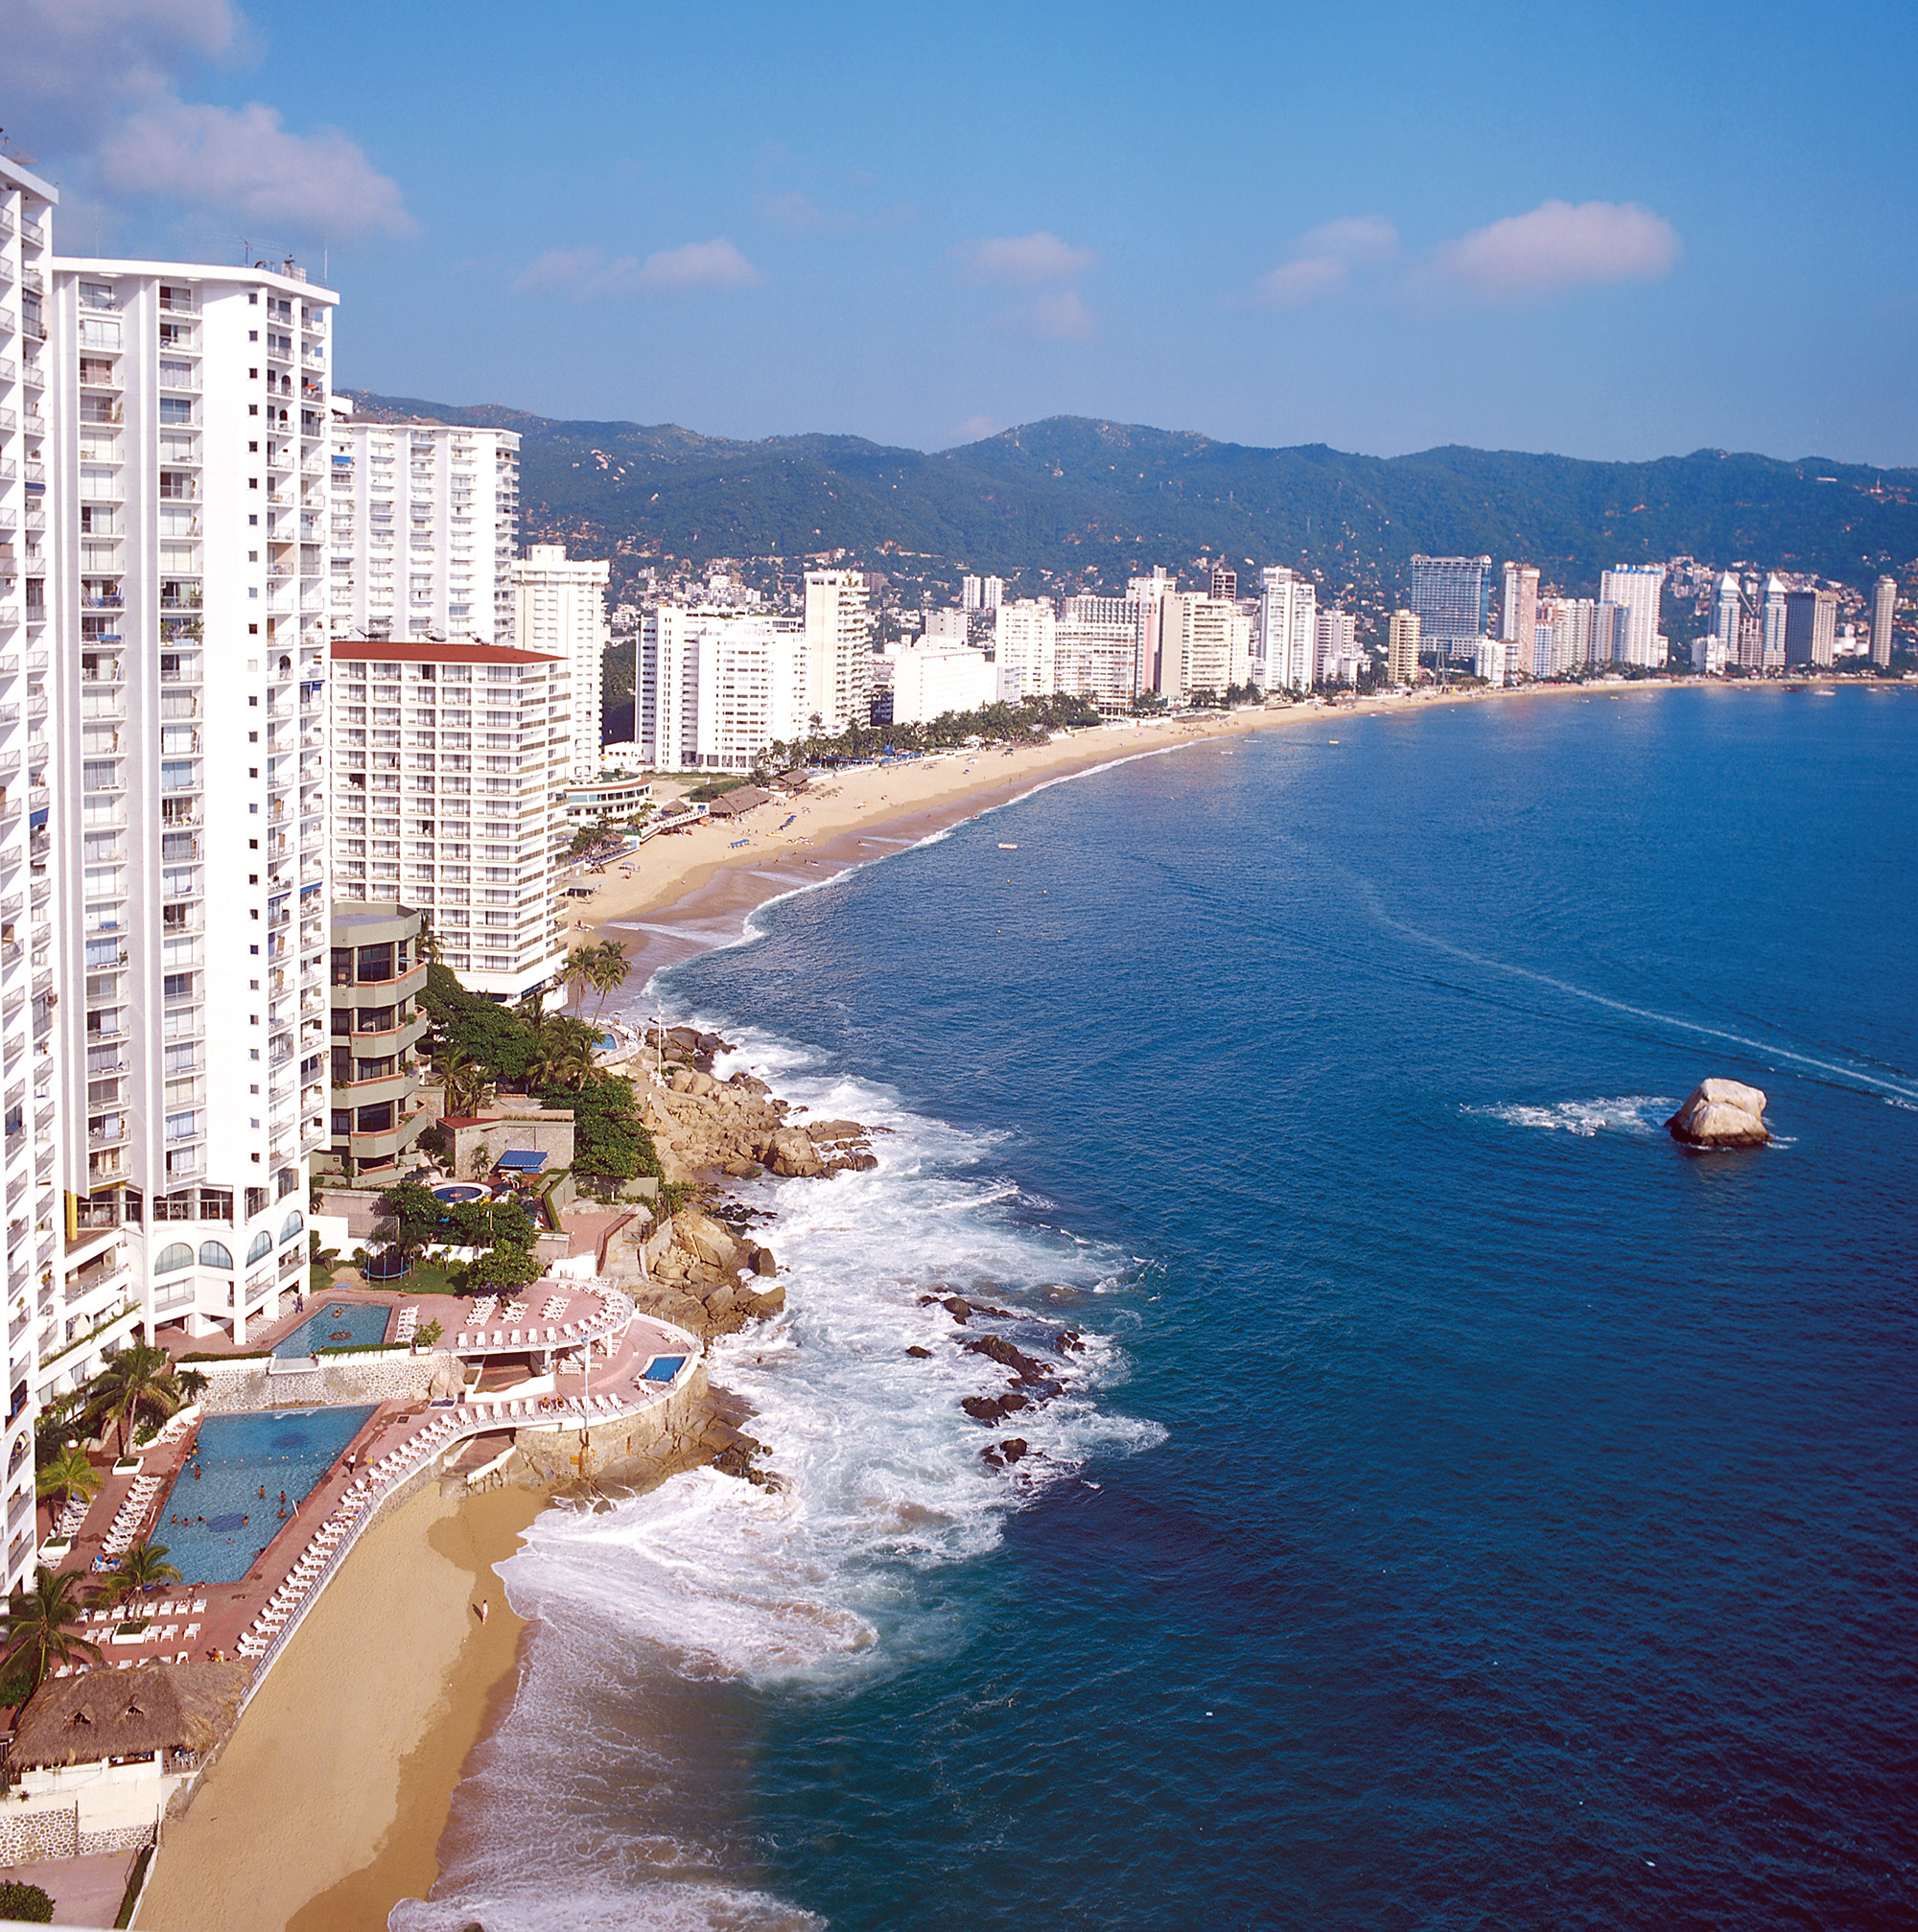 Despite devastating storm Acapulco focuses on brighter future SFGate